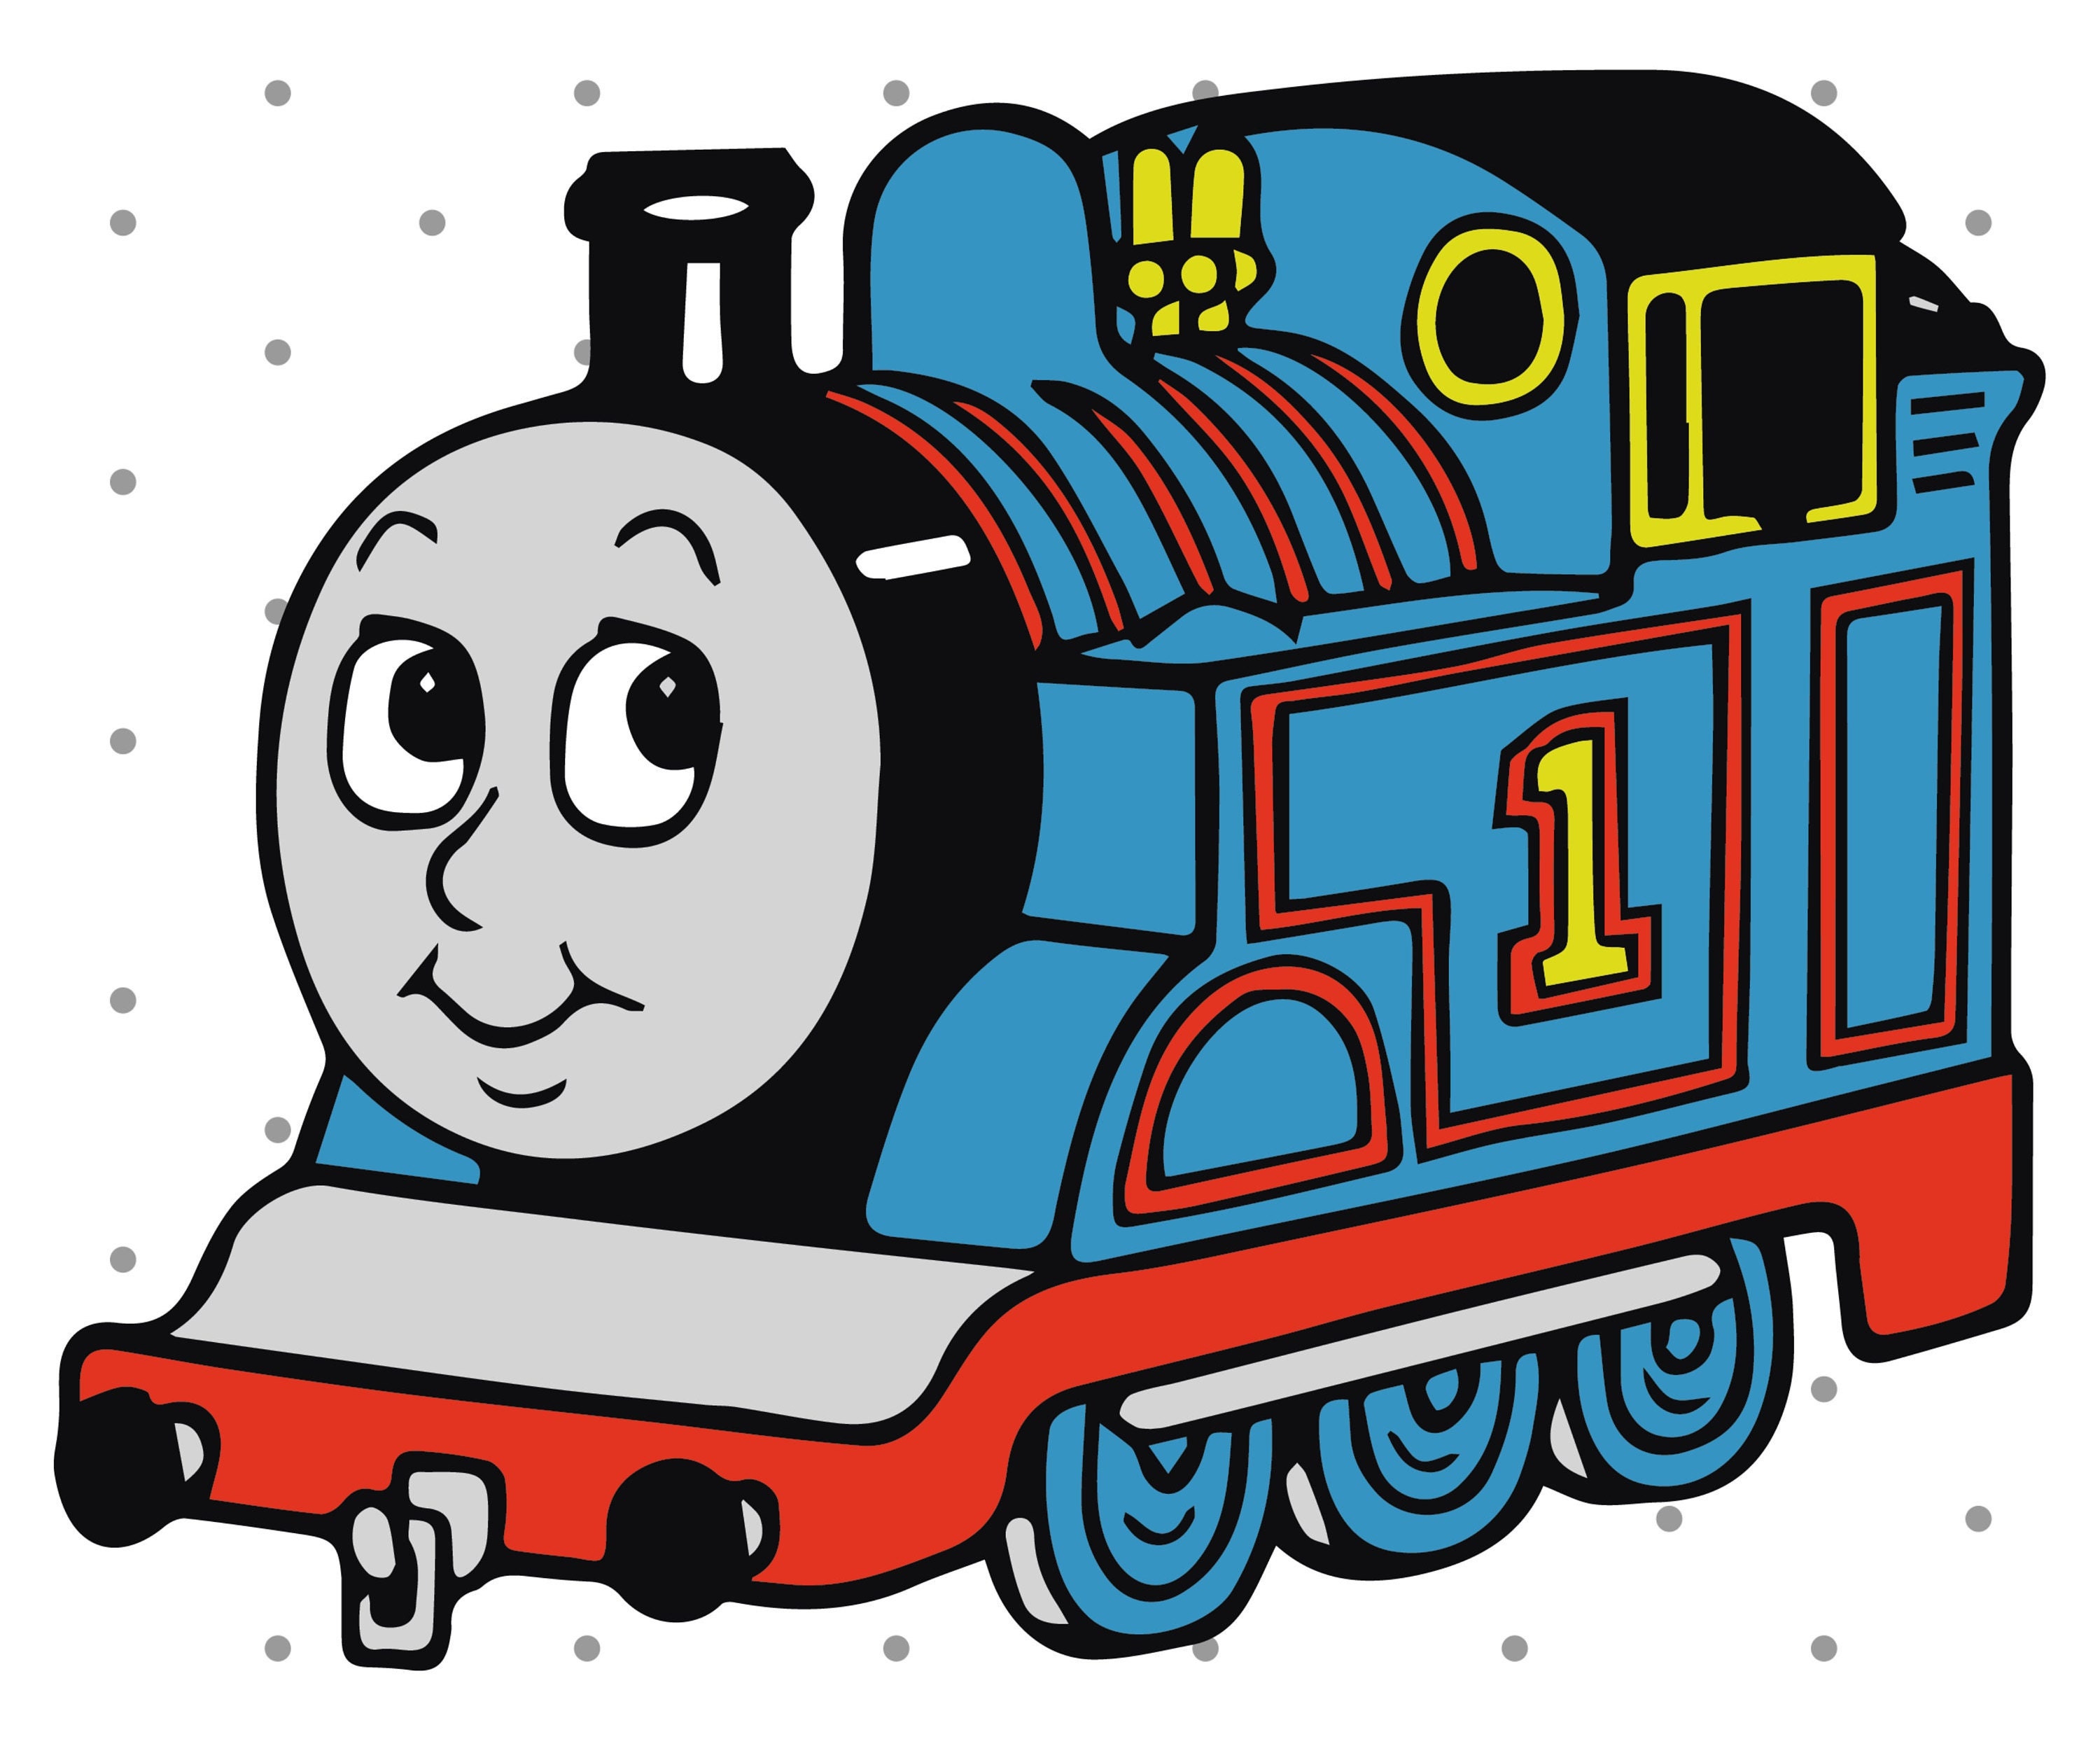 Thomas the Train Digital Paper DP3045